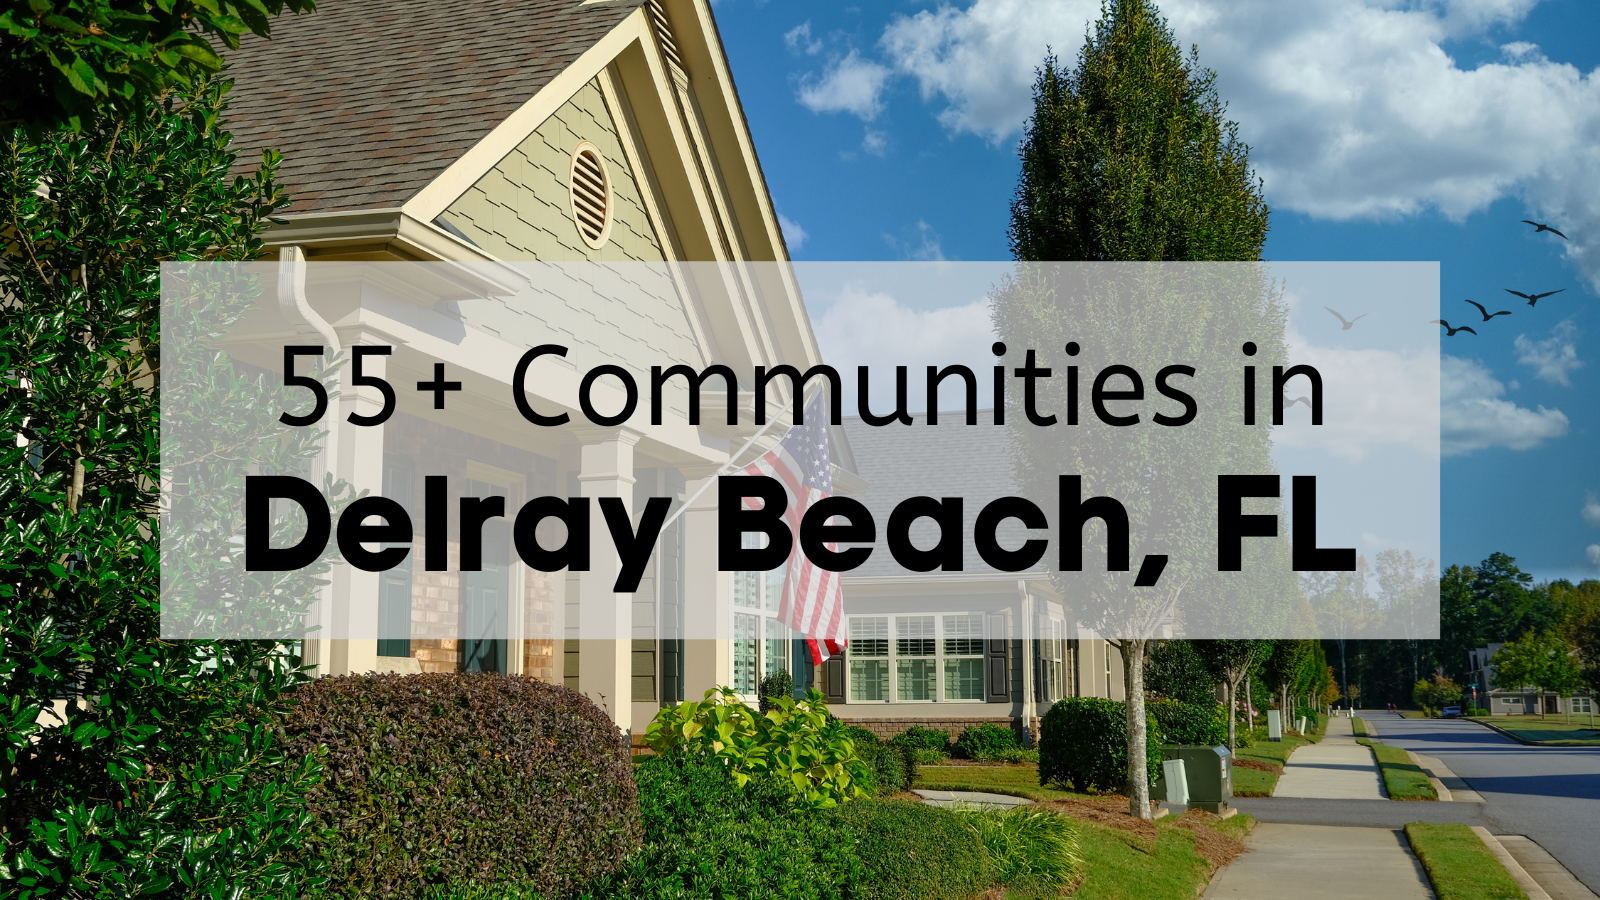 55+ communities in Delray Beach, FL